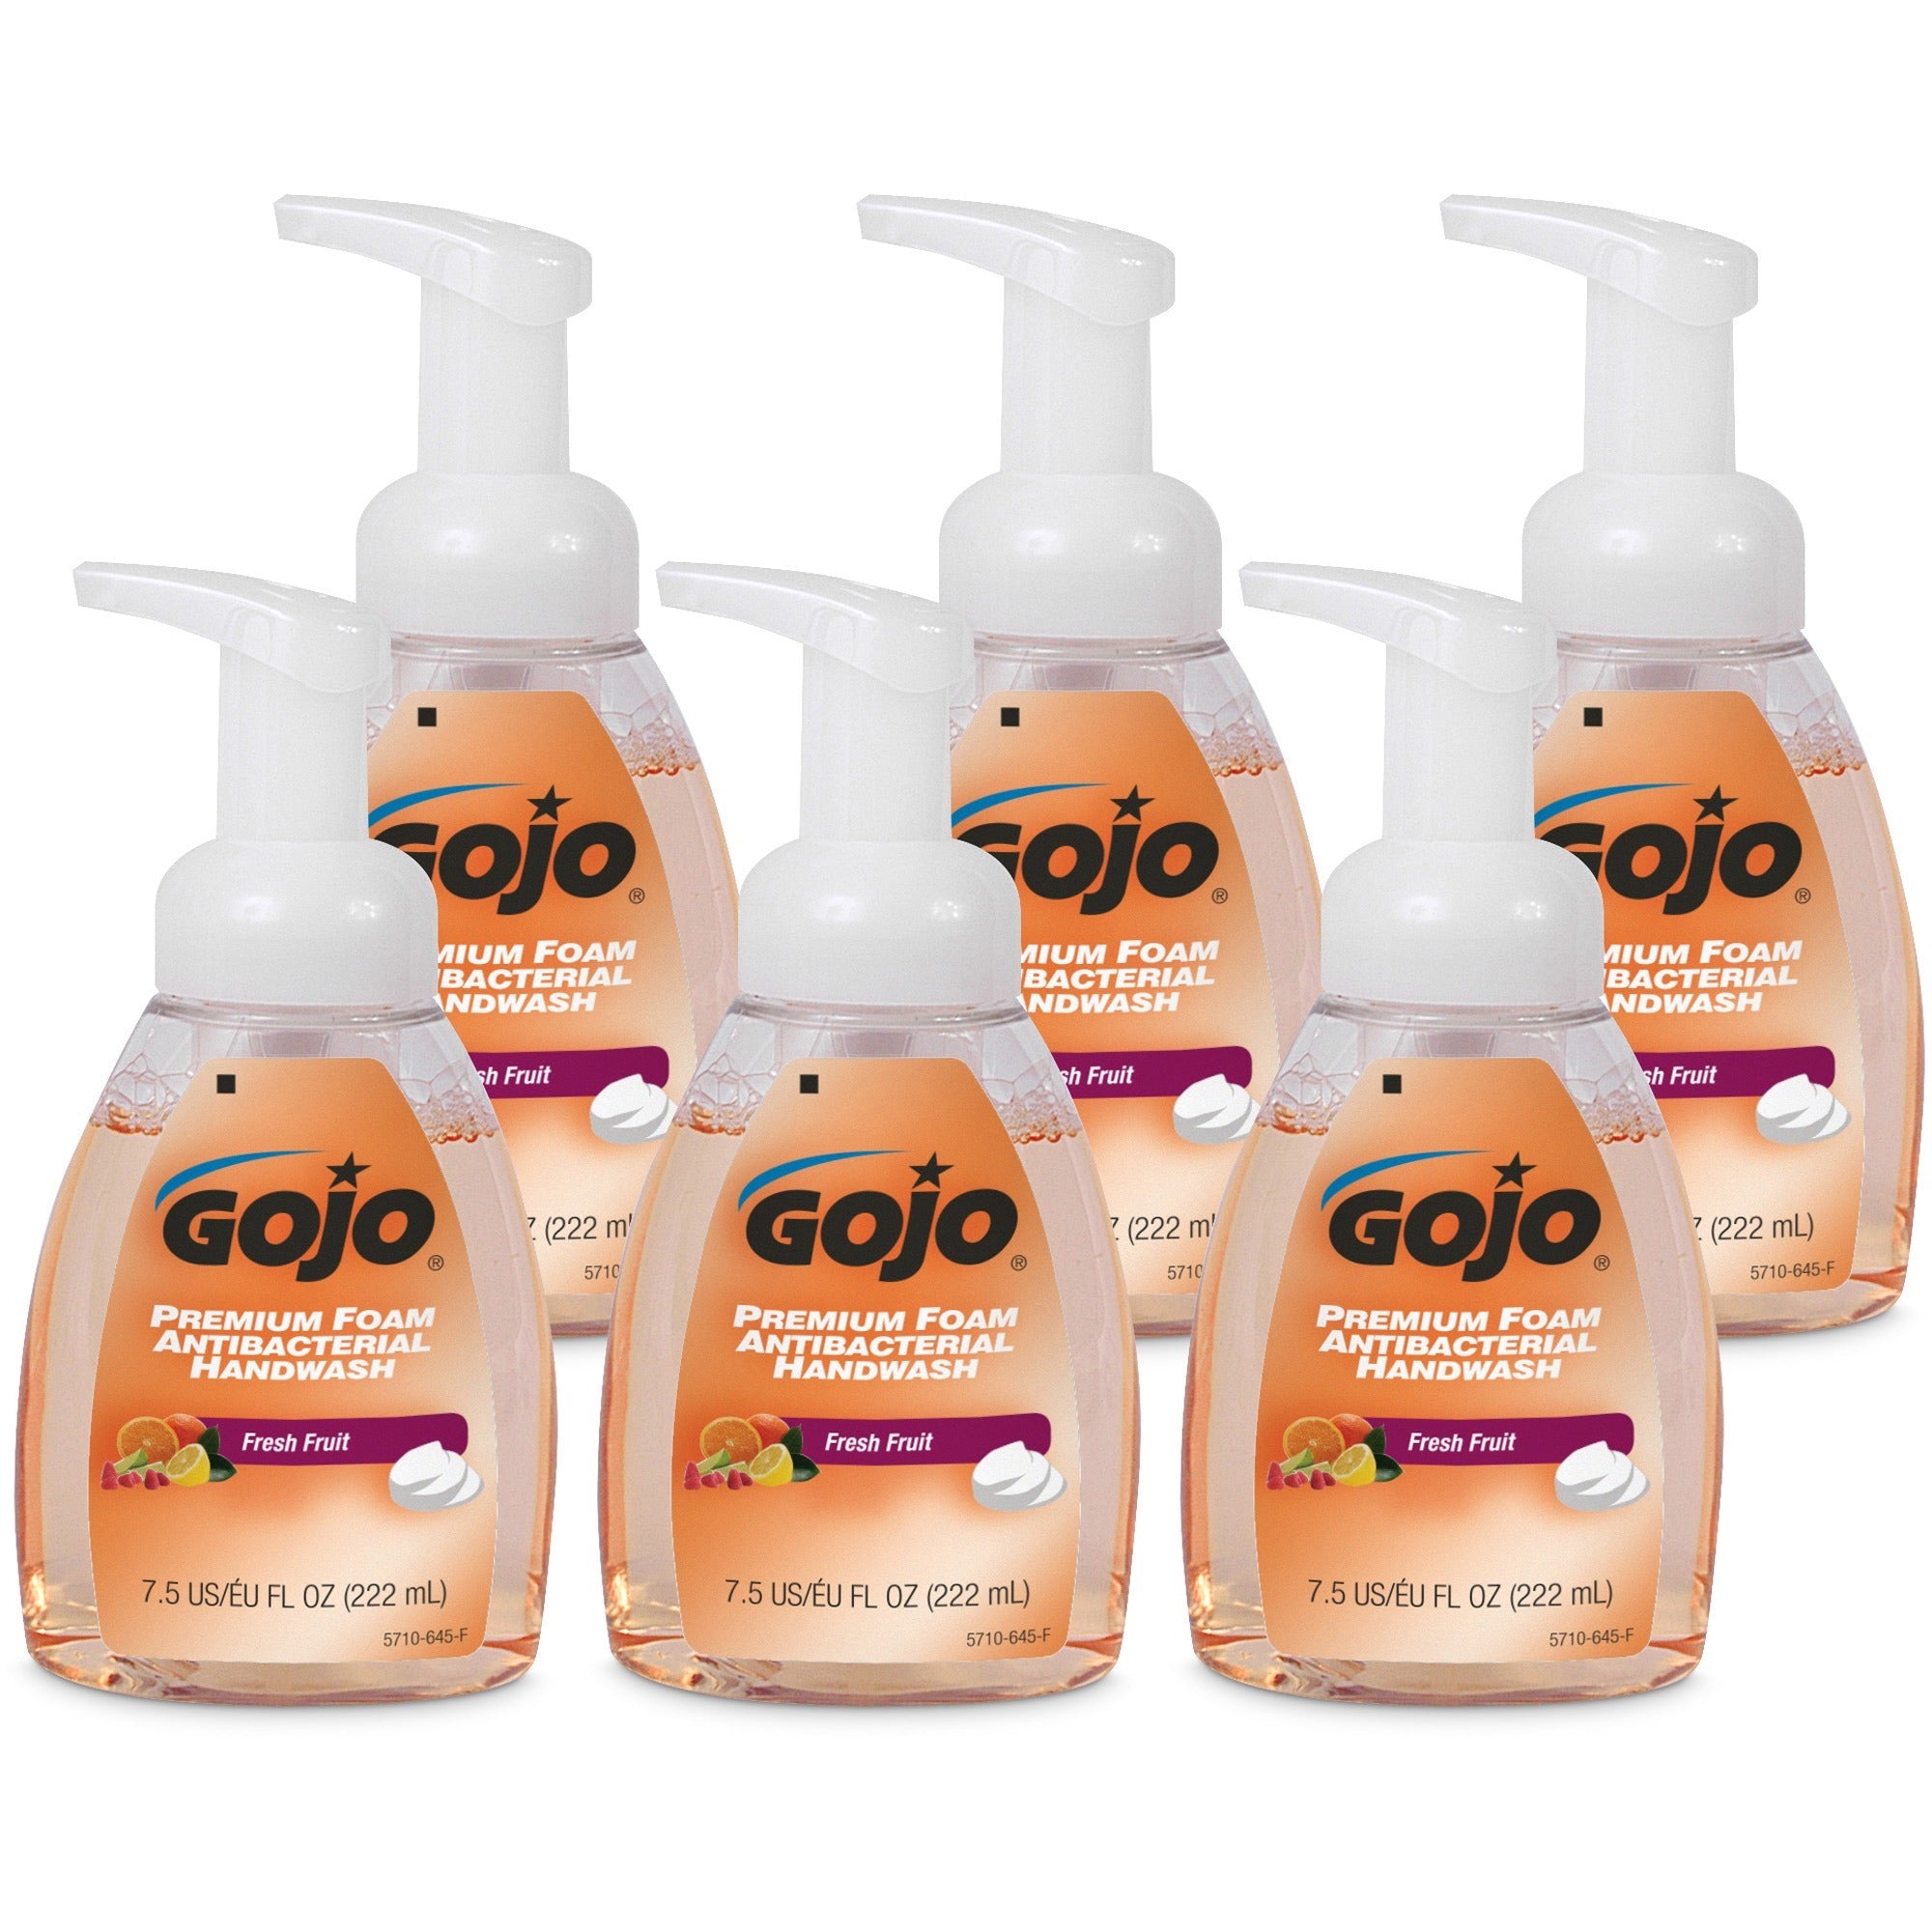 gojo-premium-foam-antibacterial-handwash-fresh-fruit-scentfor-75-fl-oz-2218-ml-pump-bottle-dispenser-kill-germs-hand-antibacterial-translucent-apricot-rich-lather-6-carton_goj571006ct - 1